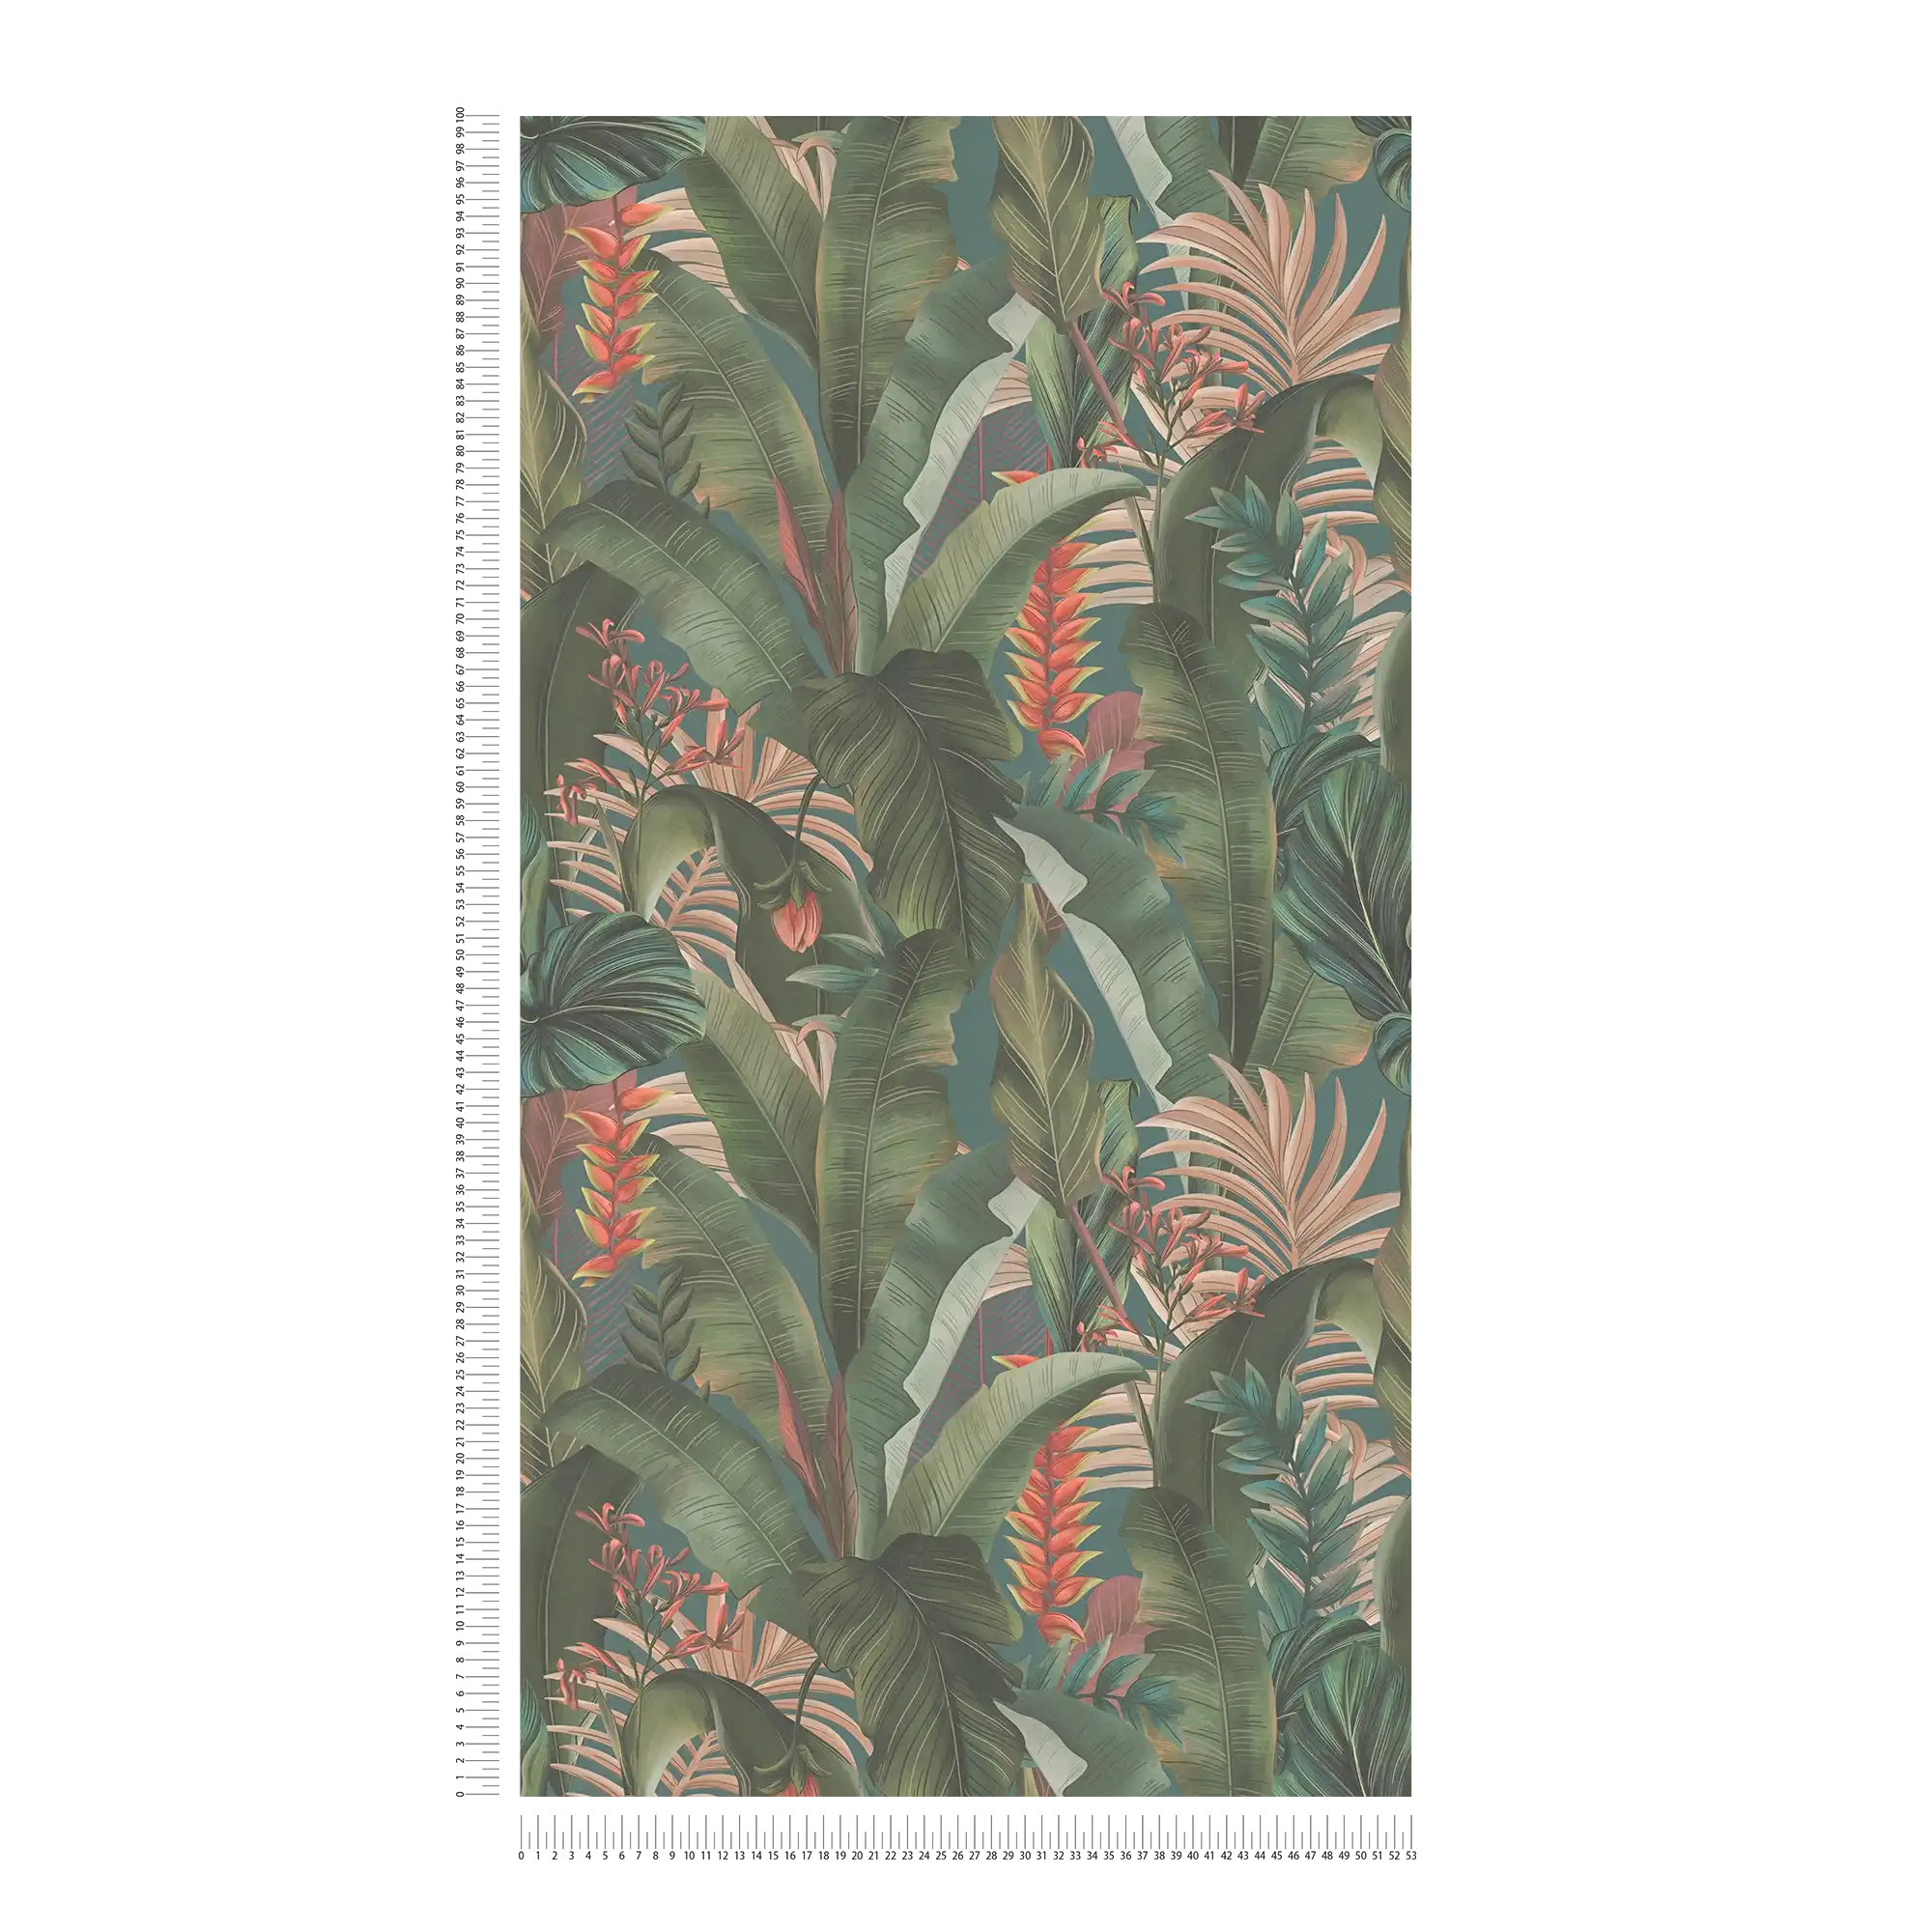             Jungle wallpaper floral with palm leaves & flowers textured matt - blue, petrol, green
        